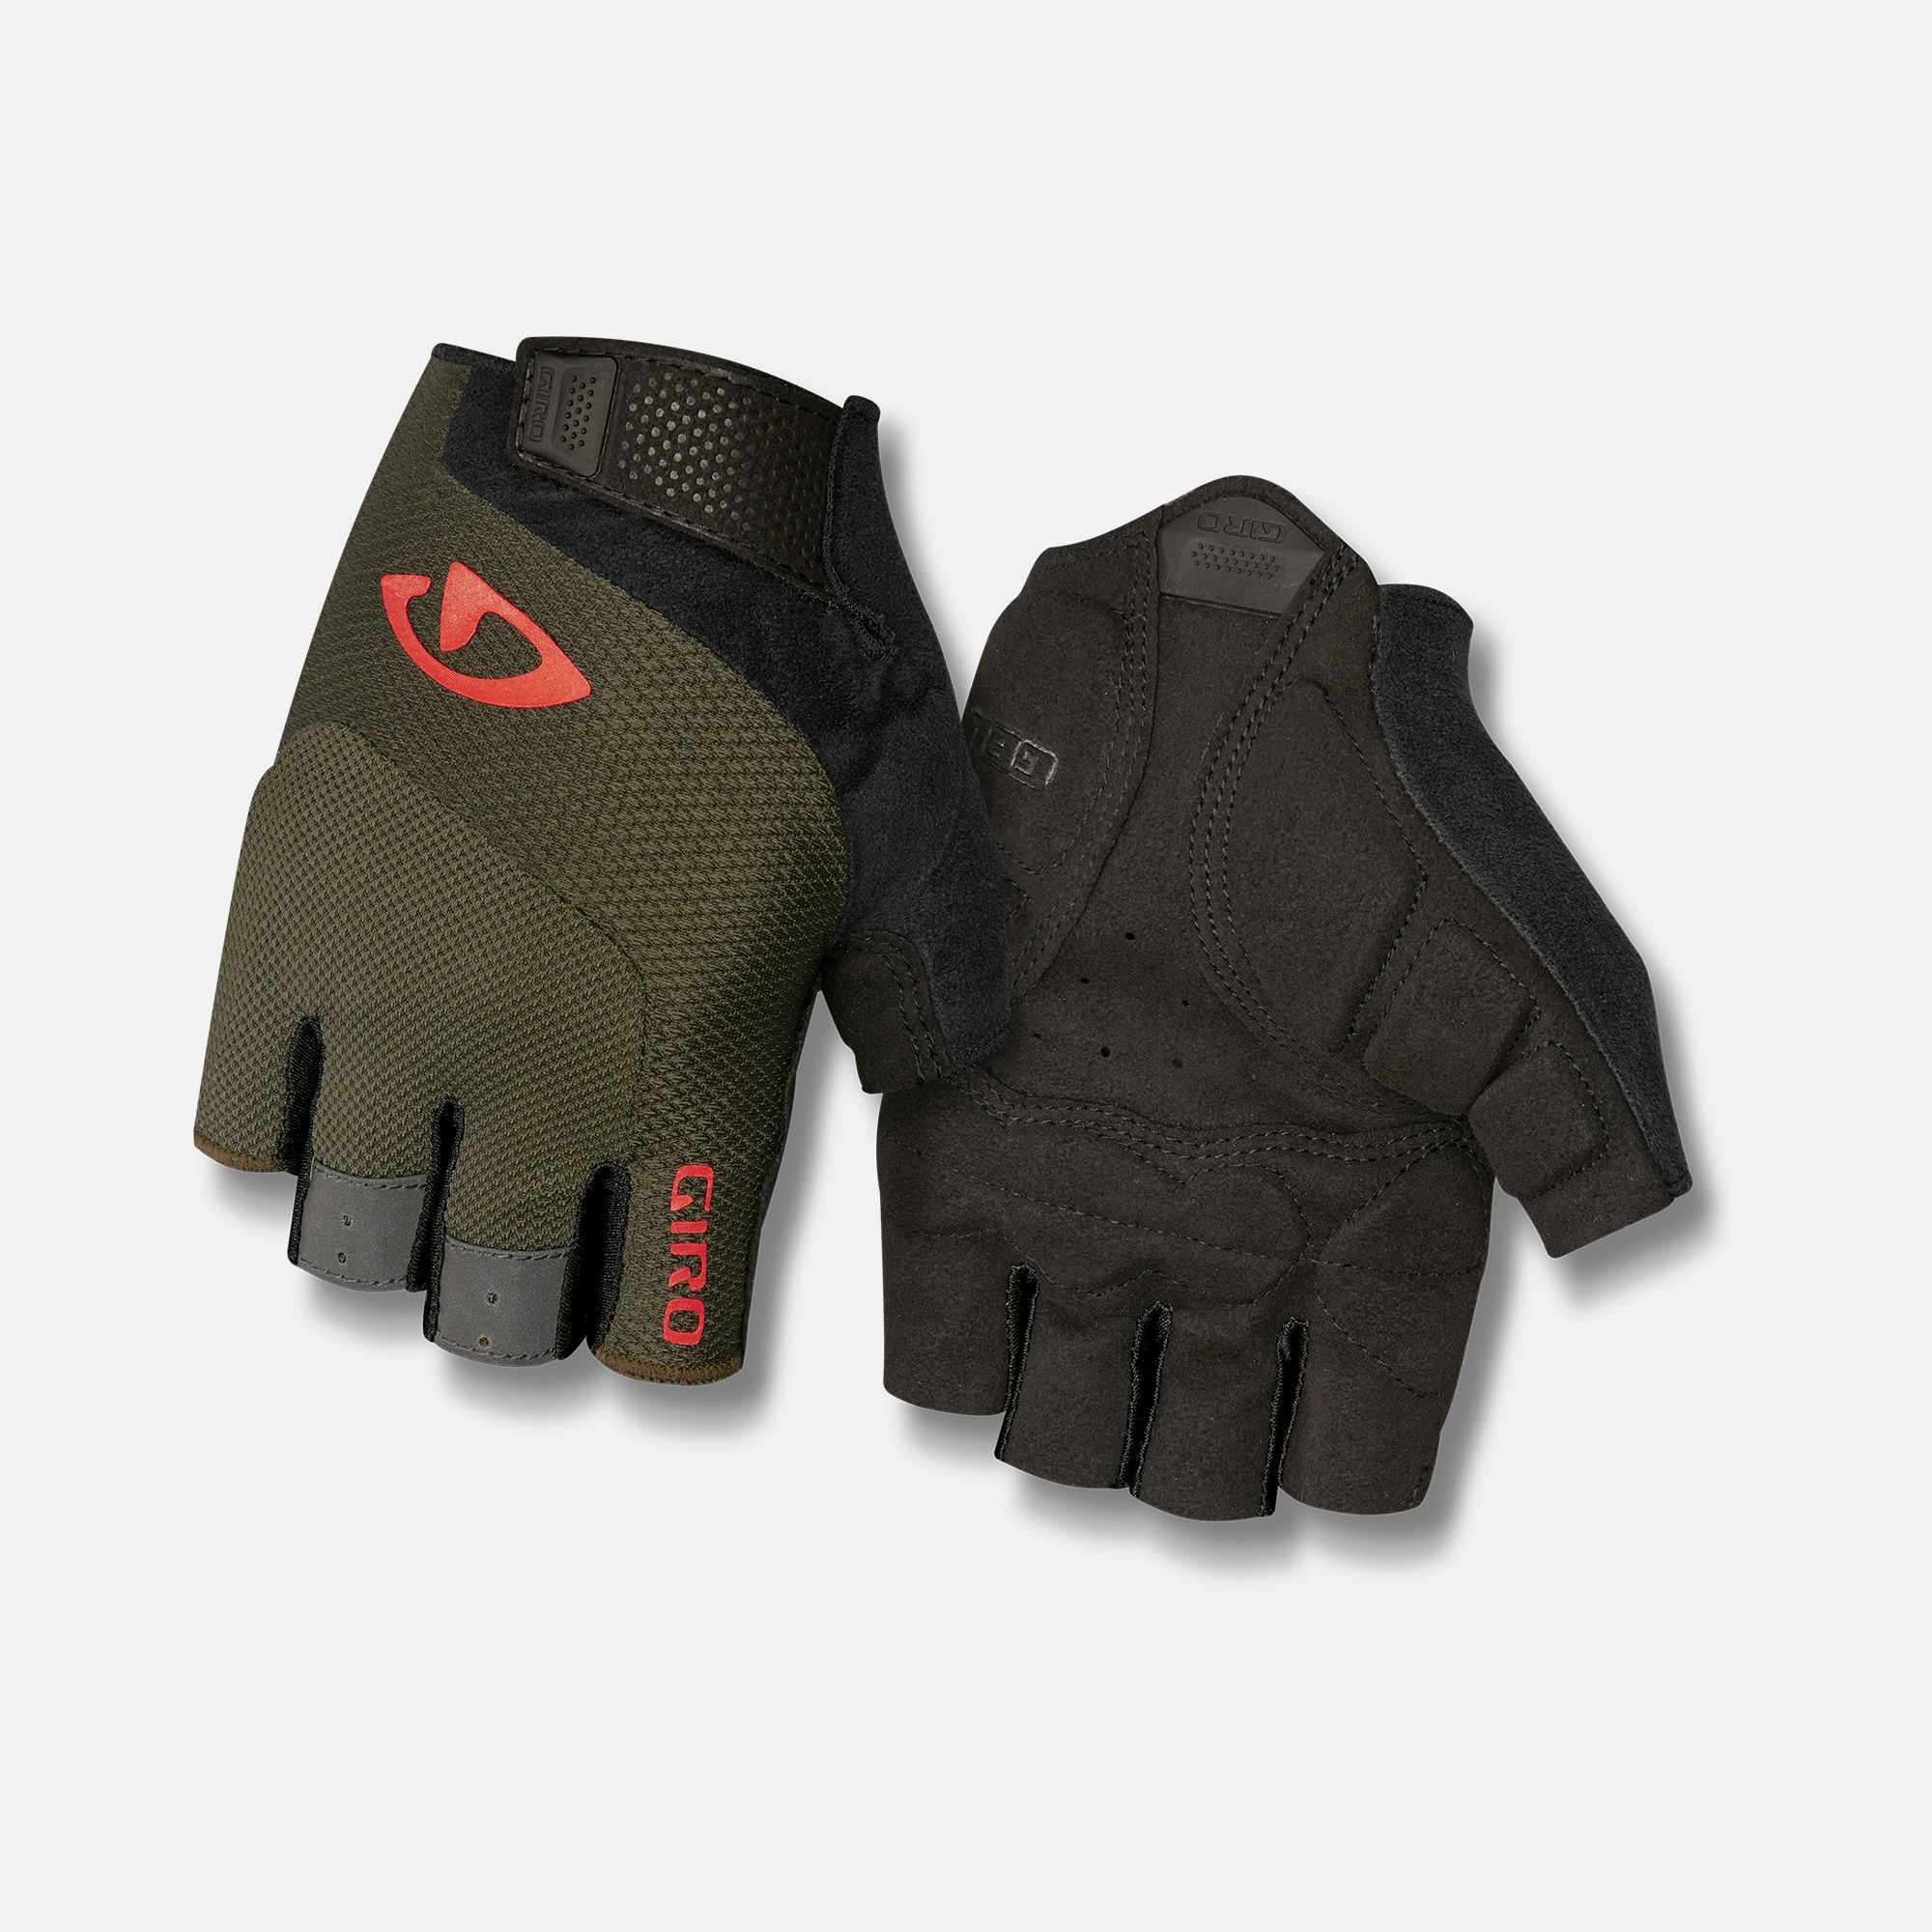 Black x Red Details about   GIRO Bravo Gel Moisture Wicking Bike Short Finger Gloves